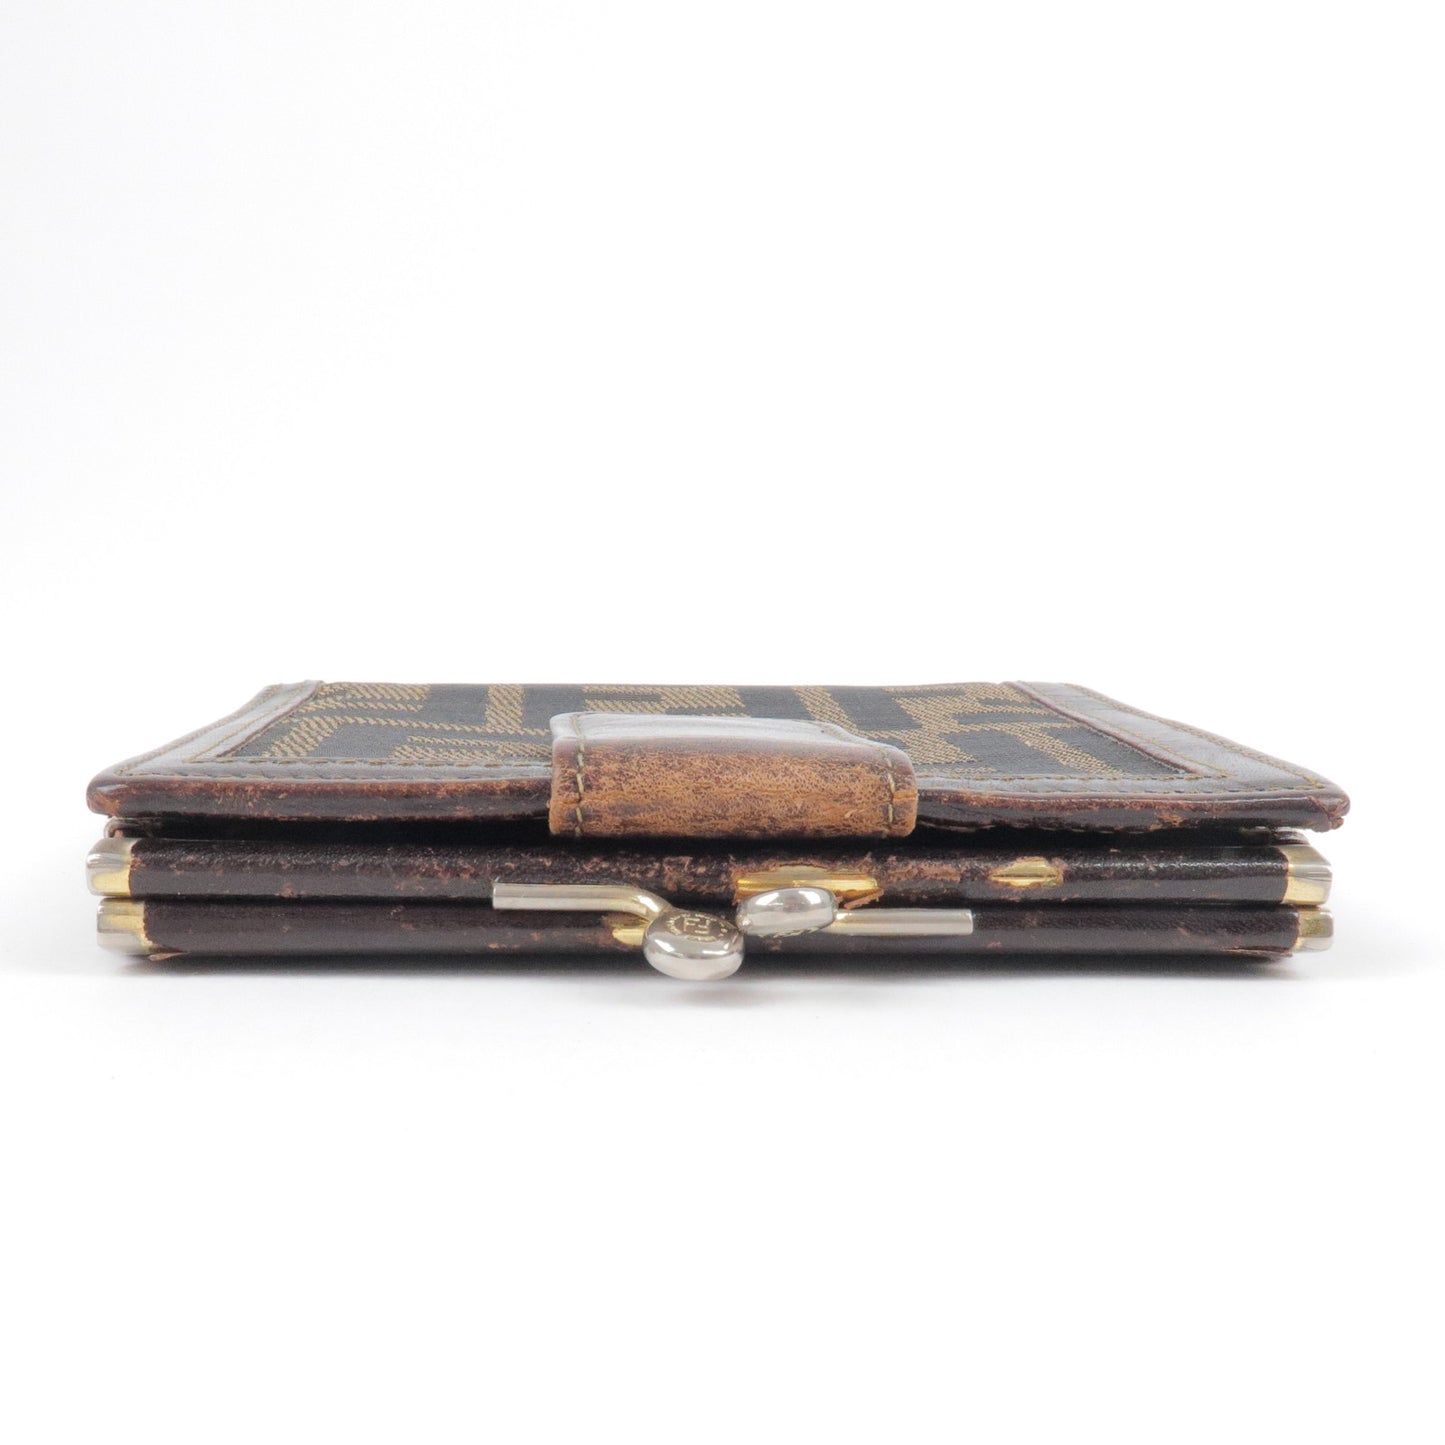 FENDI Set of 2 Zucca Zucchino Canvas Leather Wallet 30782 8M0018